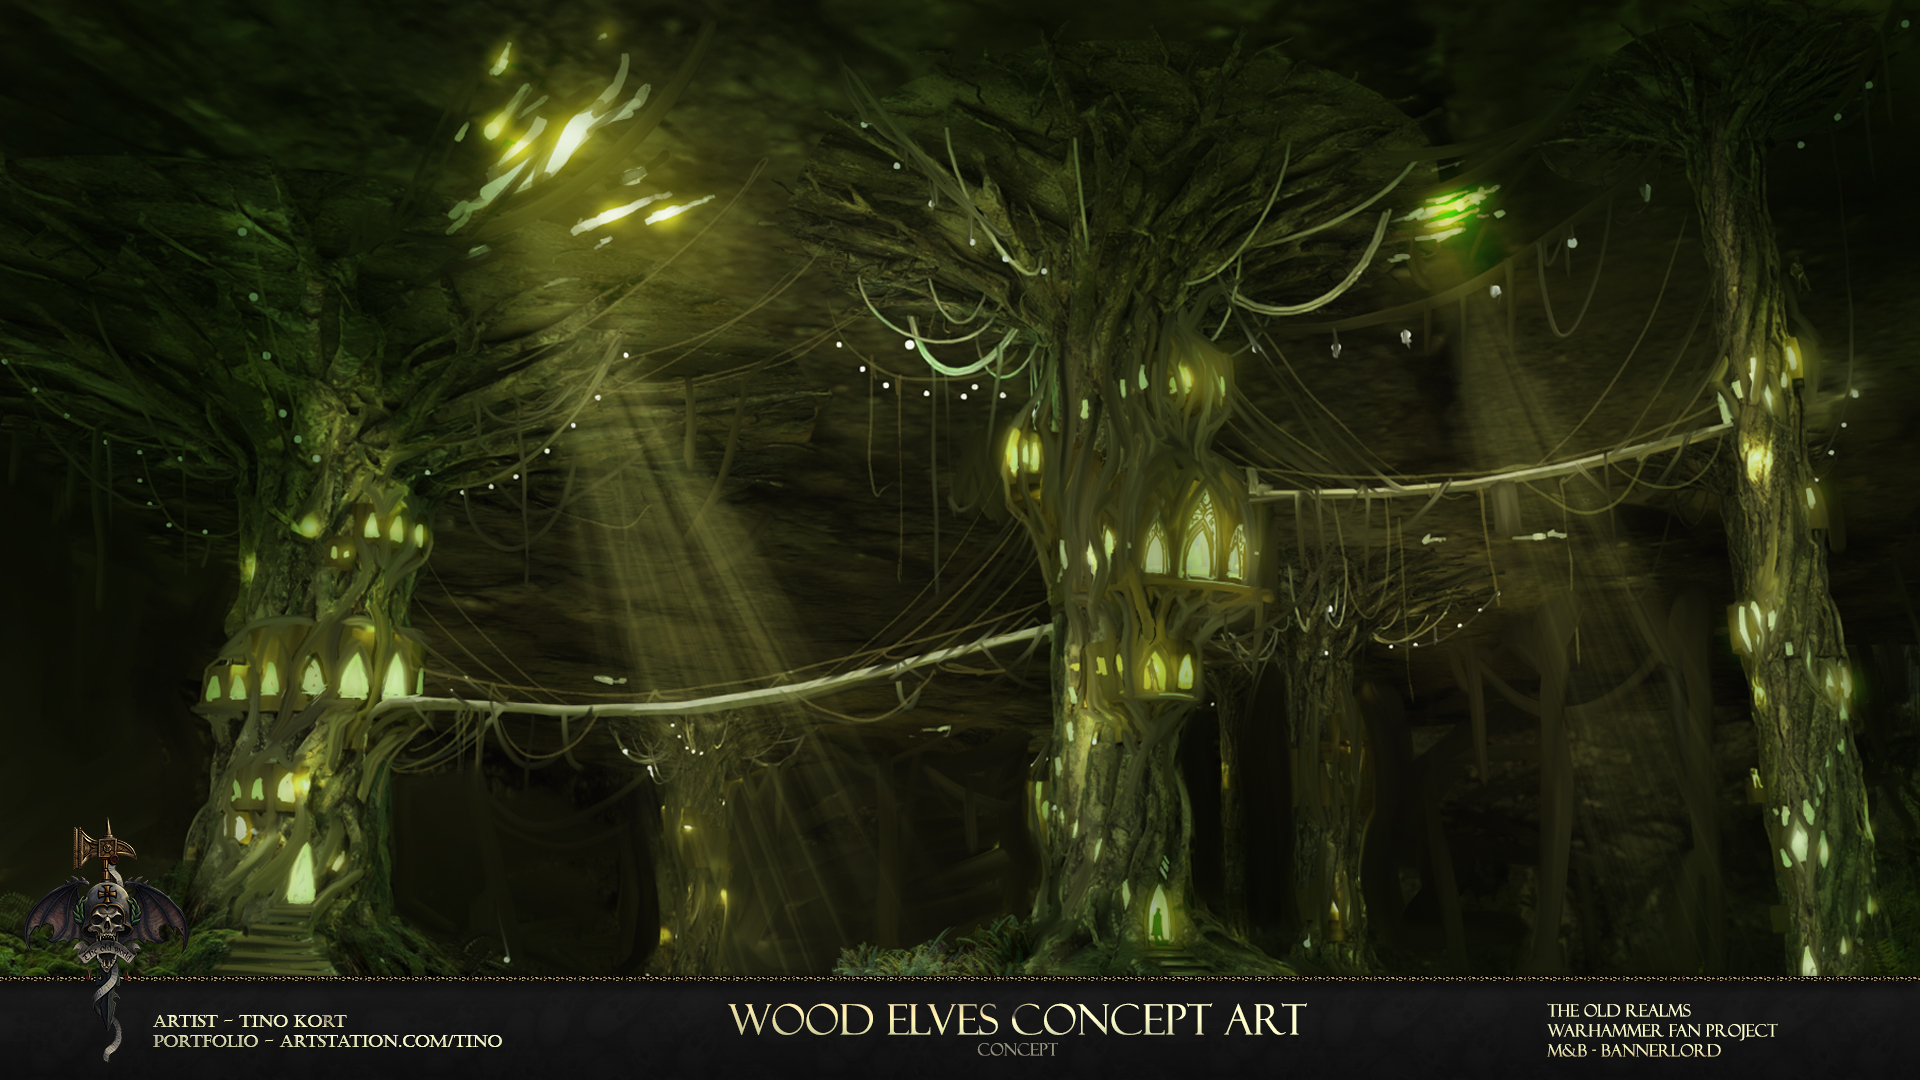 Wood elves concept art